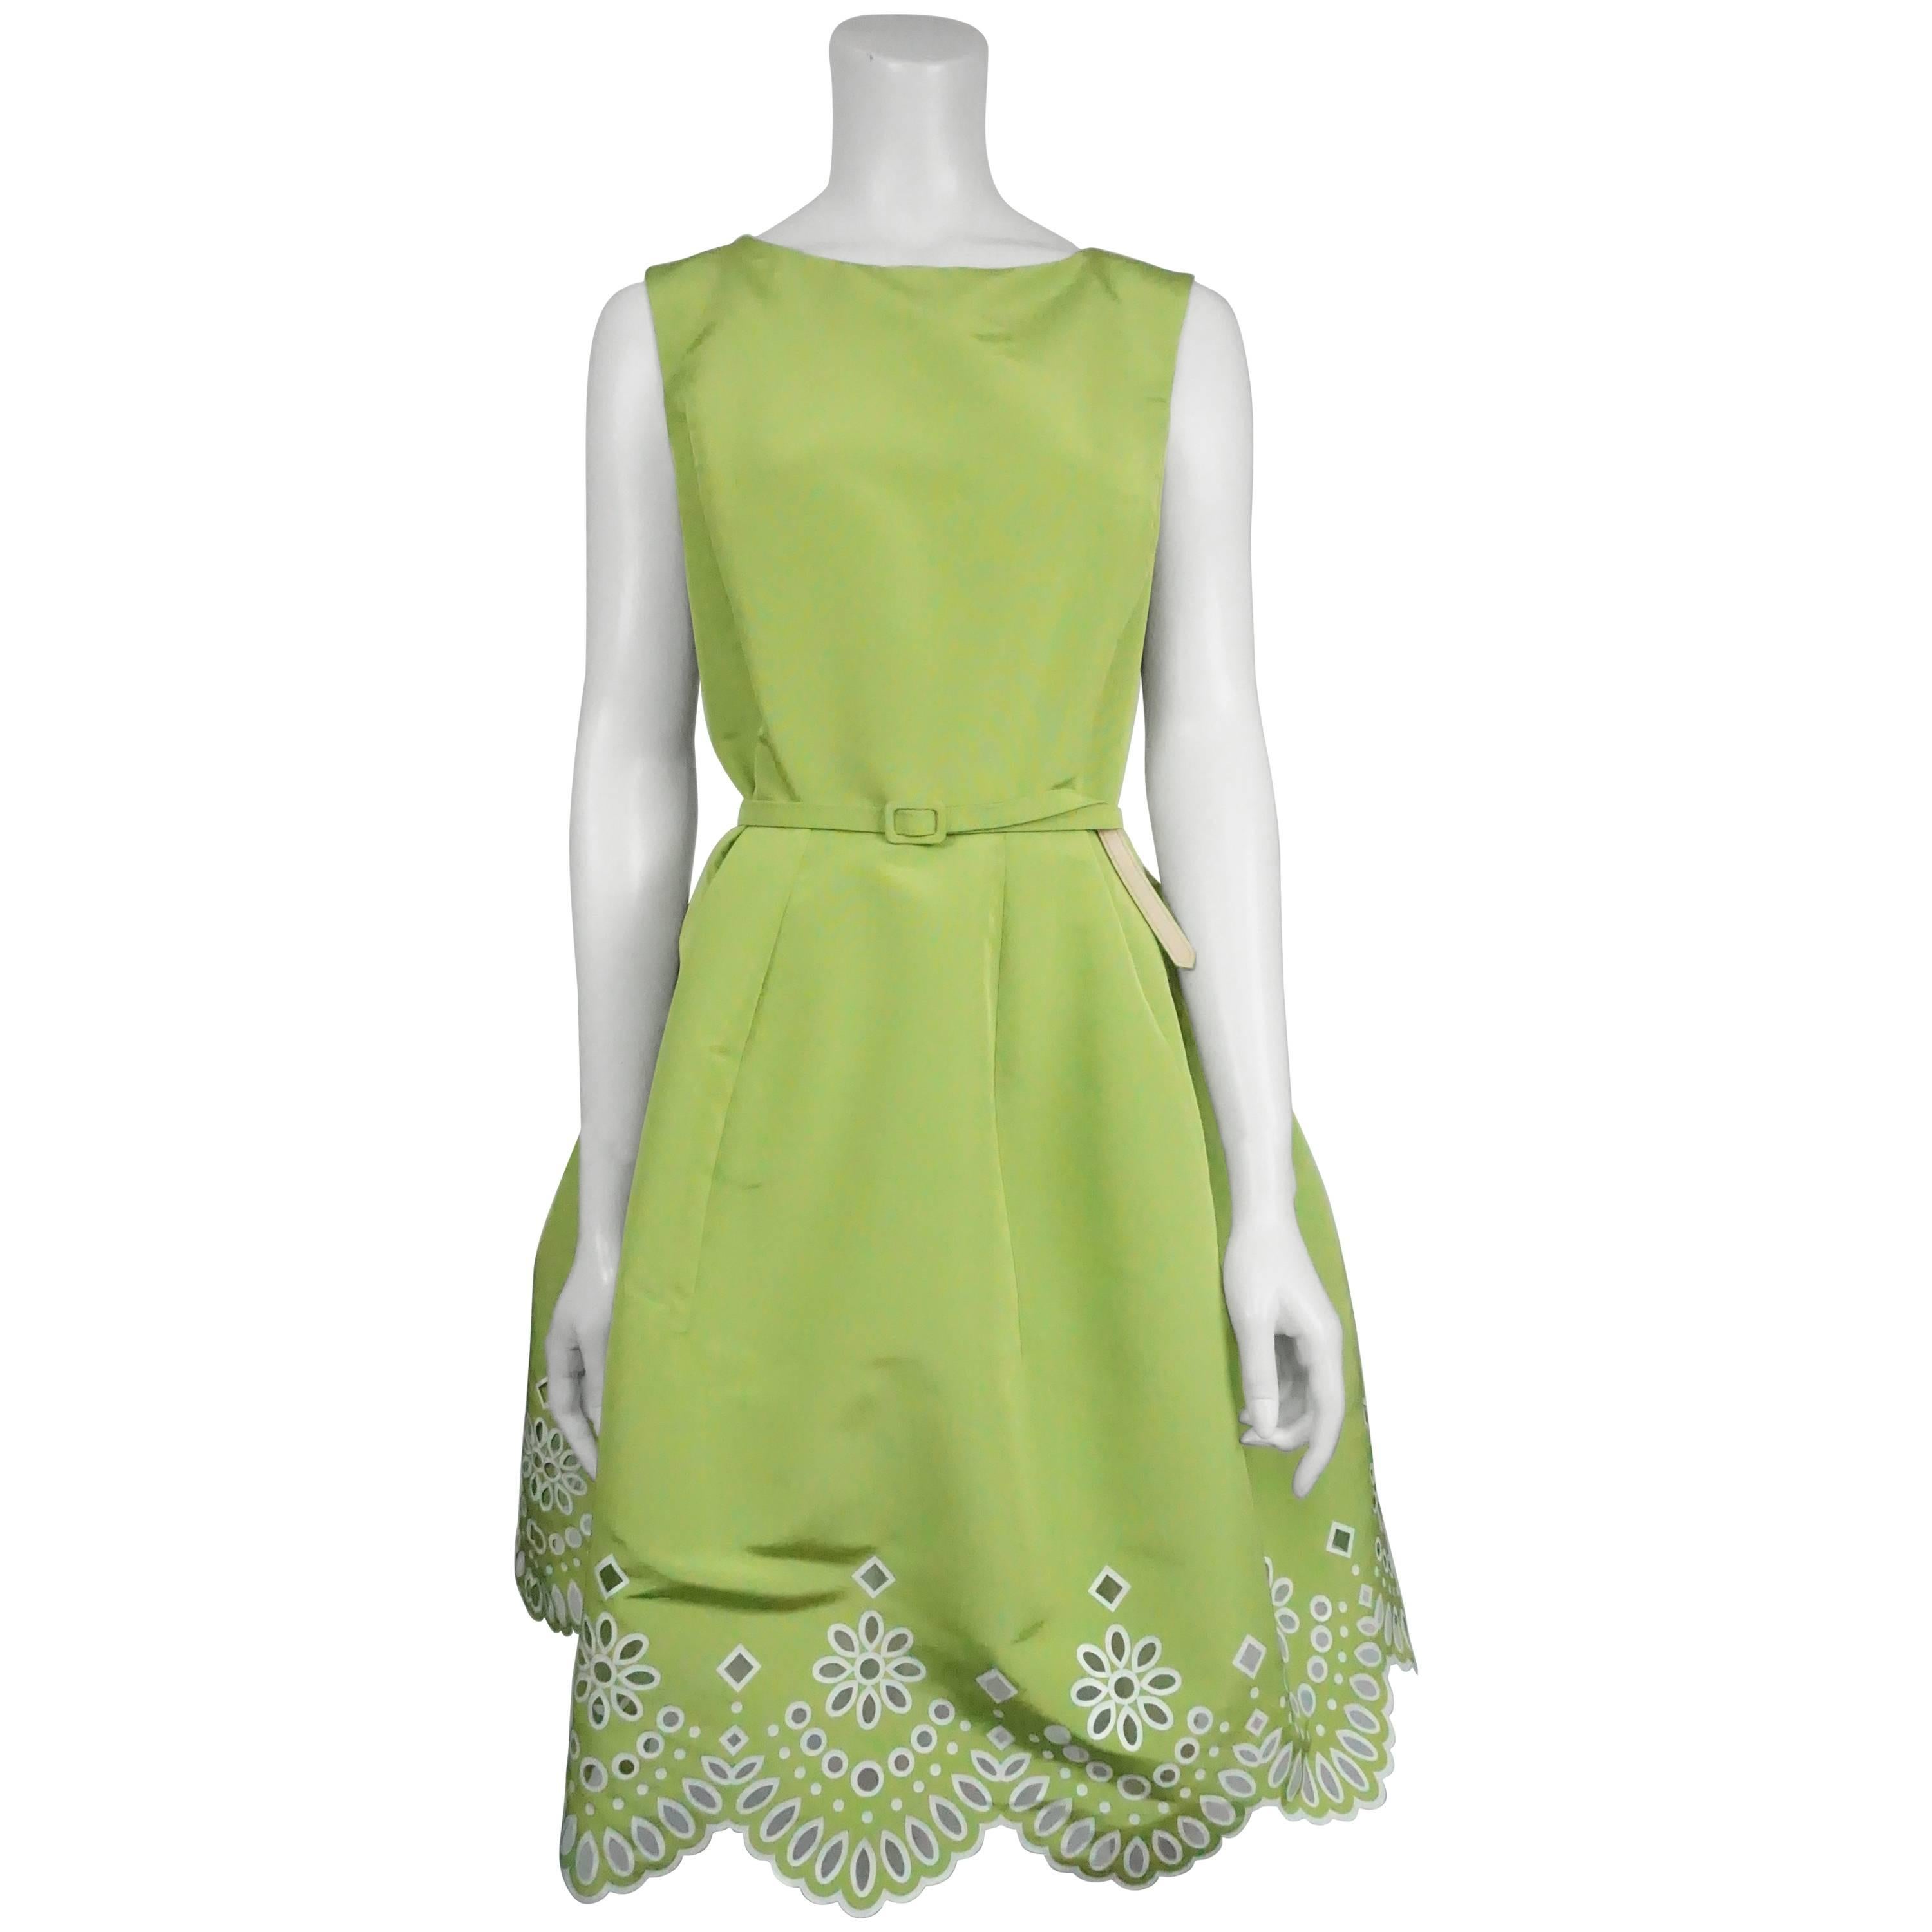 Oscar De La Renta Lime Green and White Eyelet Silk Chartreuse Dress - 10 - NWT